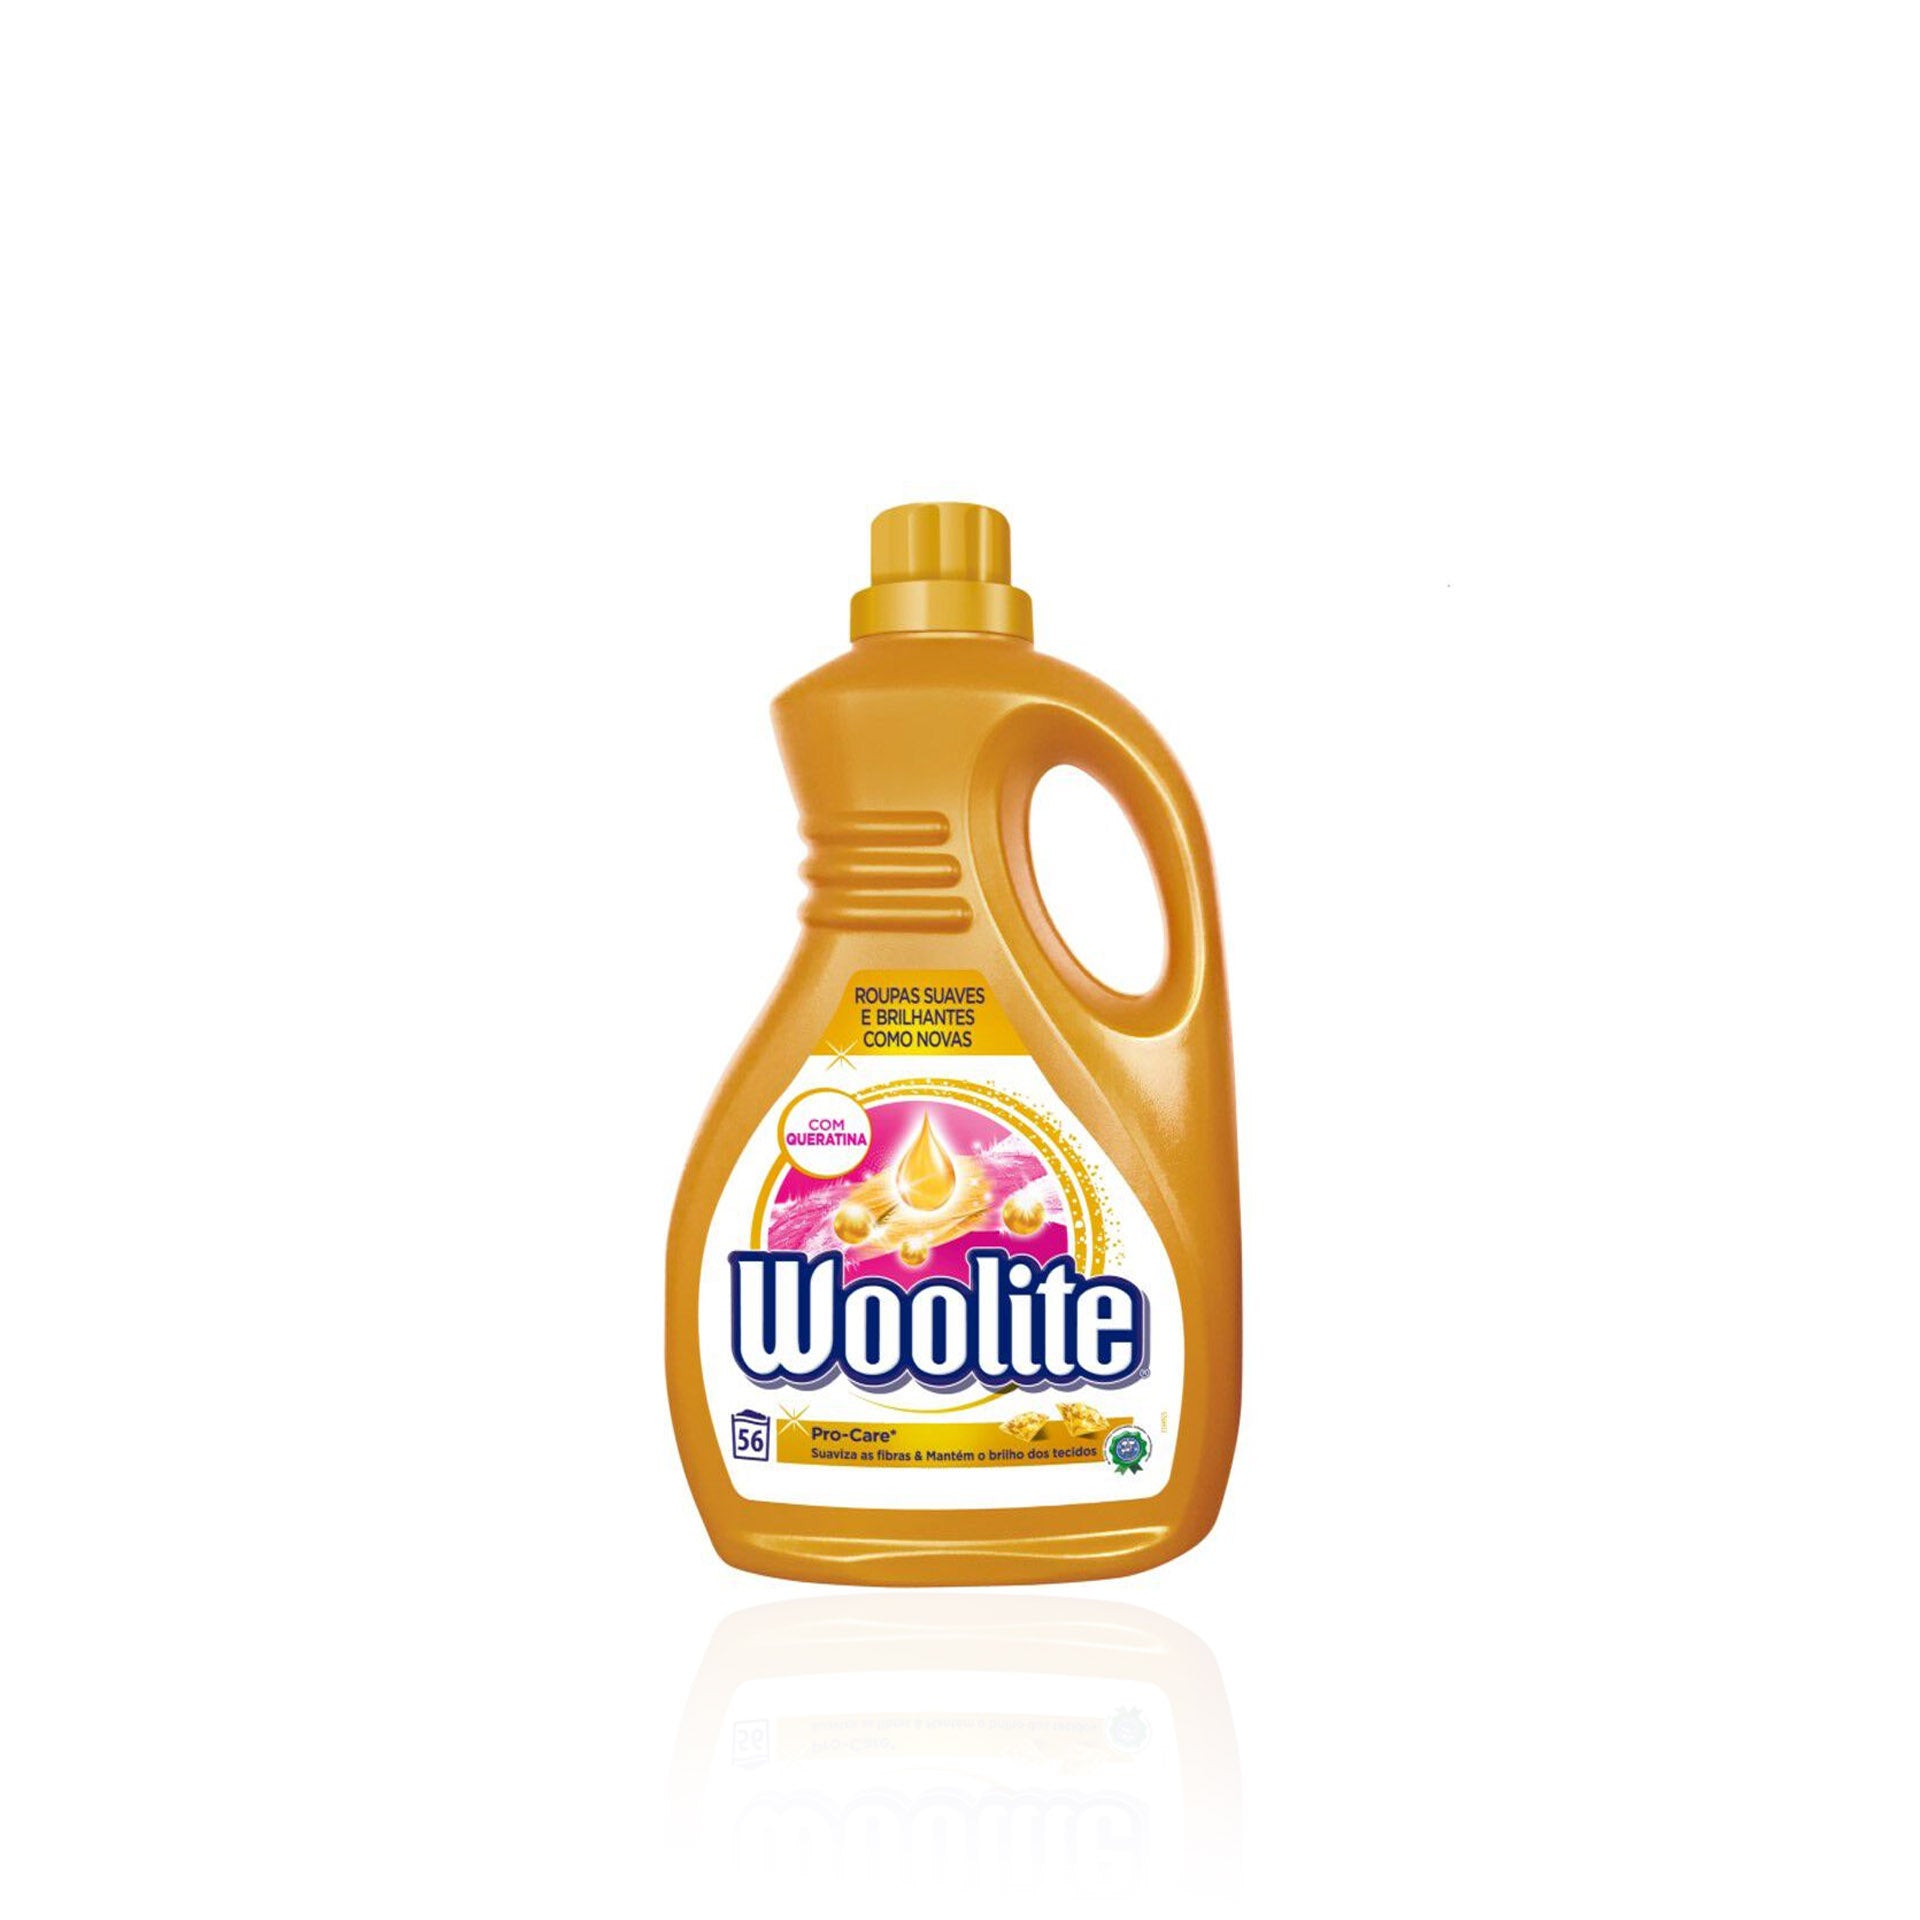 Woolite Detergente Líquido Pro-Care Máquina Roupa Delicada 56 Doses